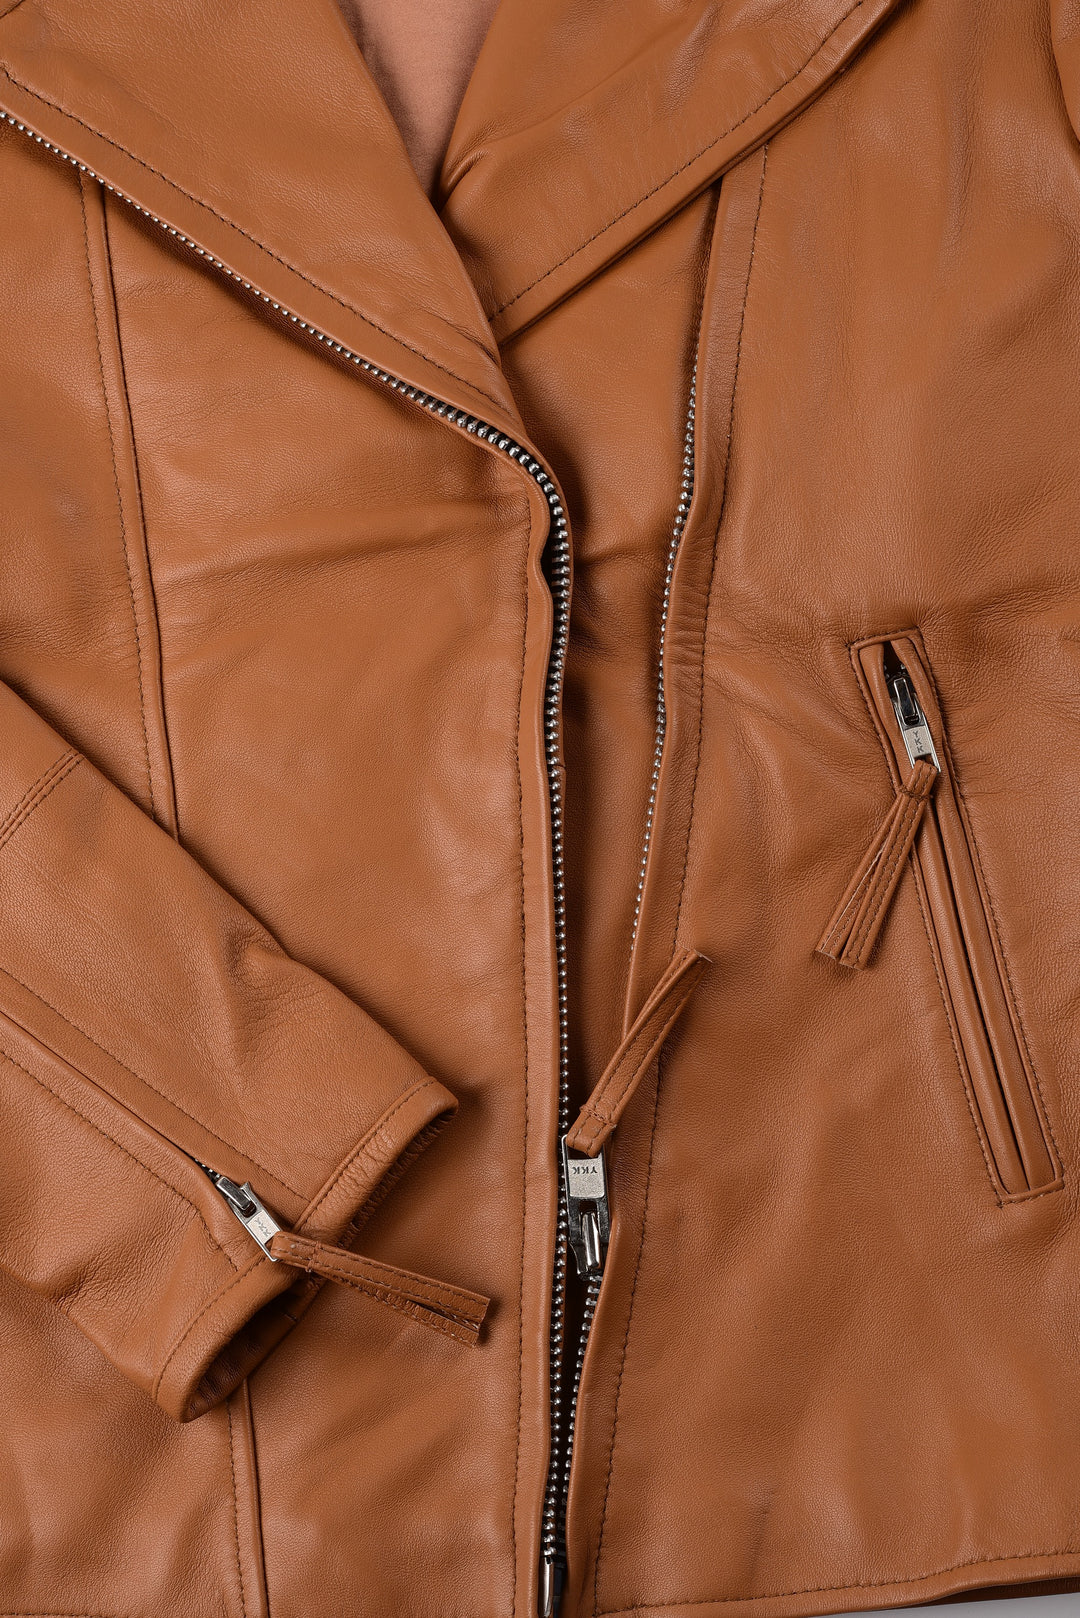 Kate Winslet Brown Leather Jacket